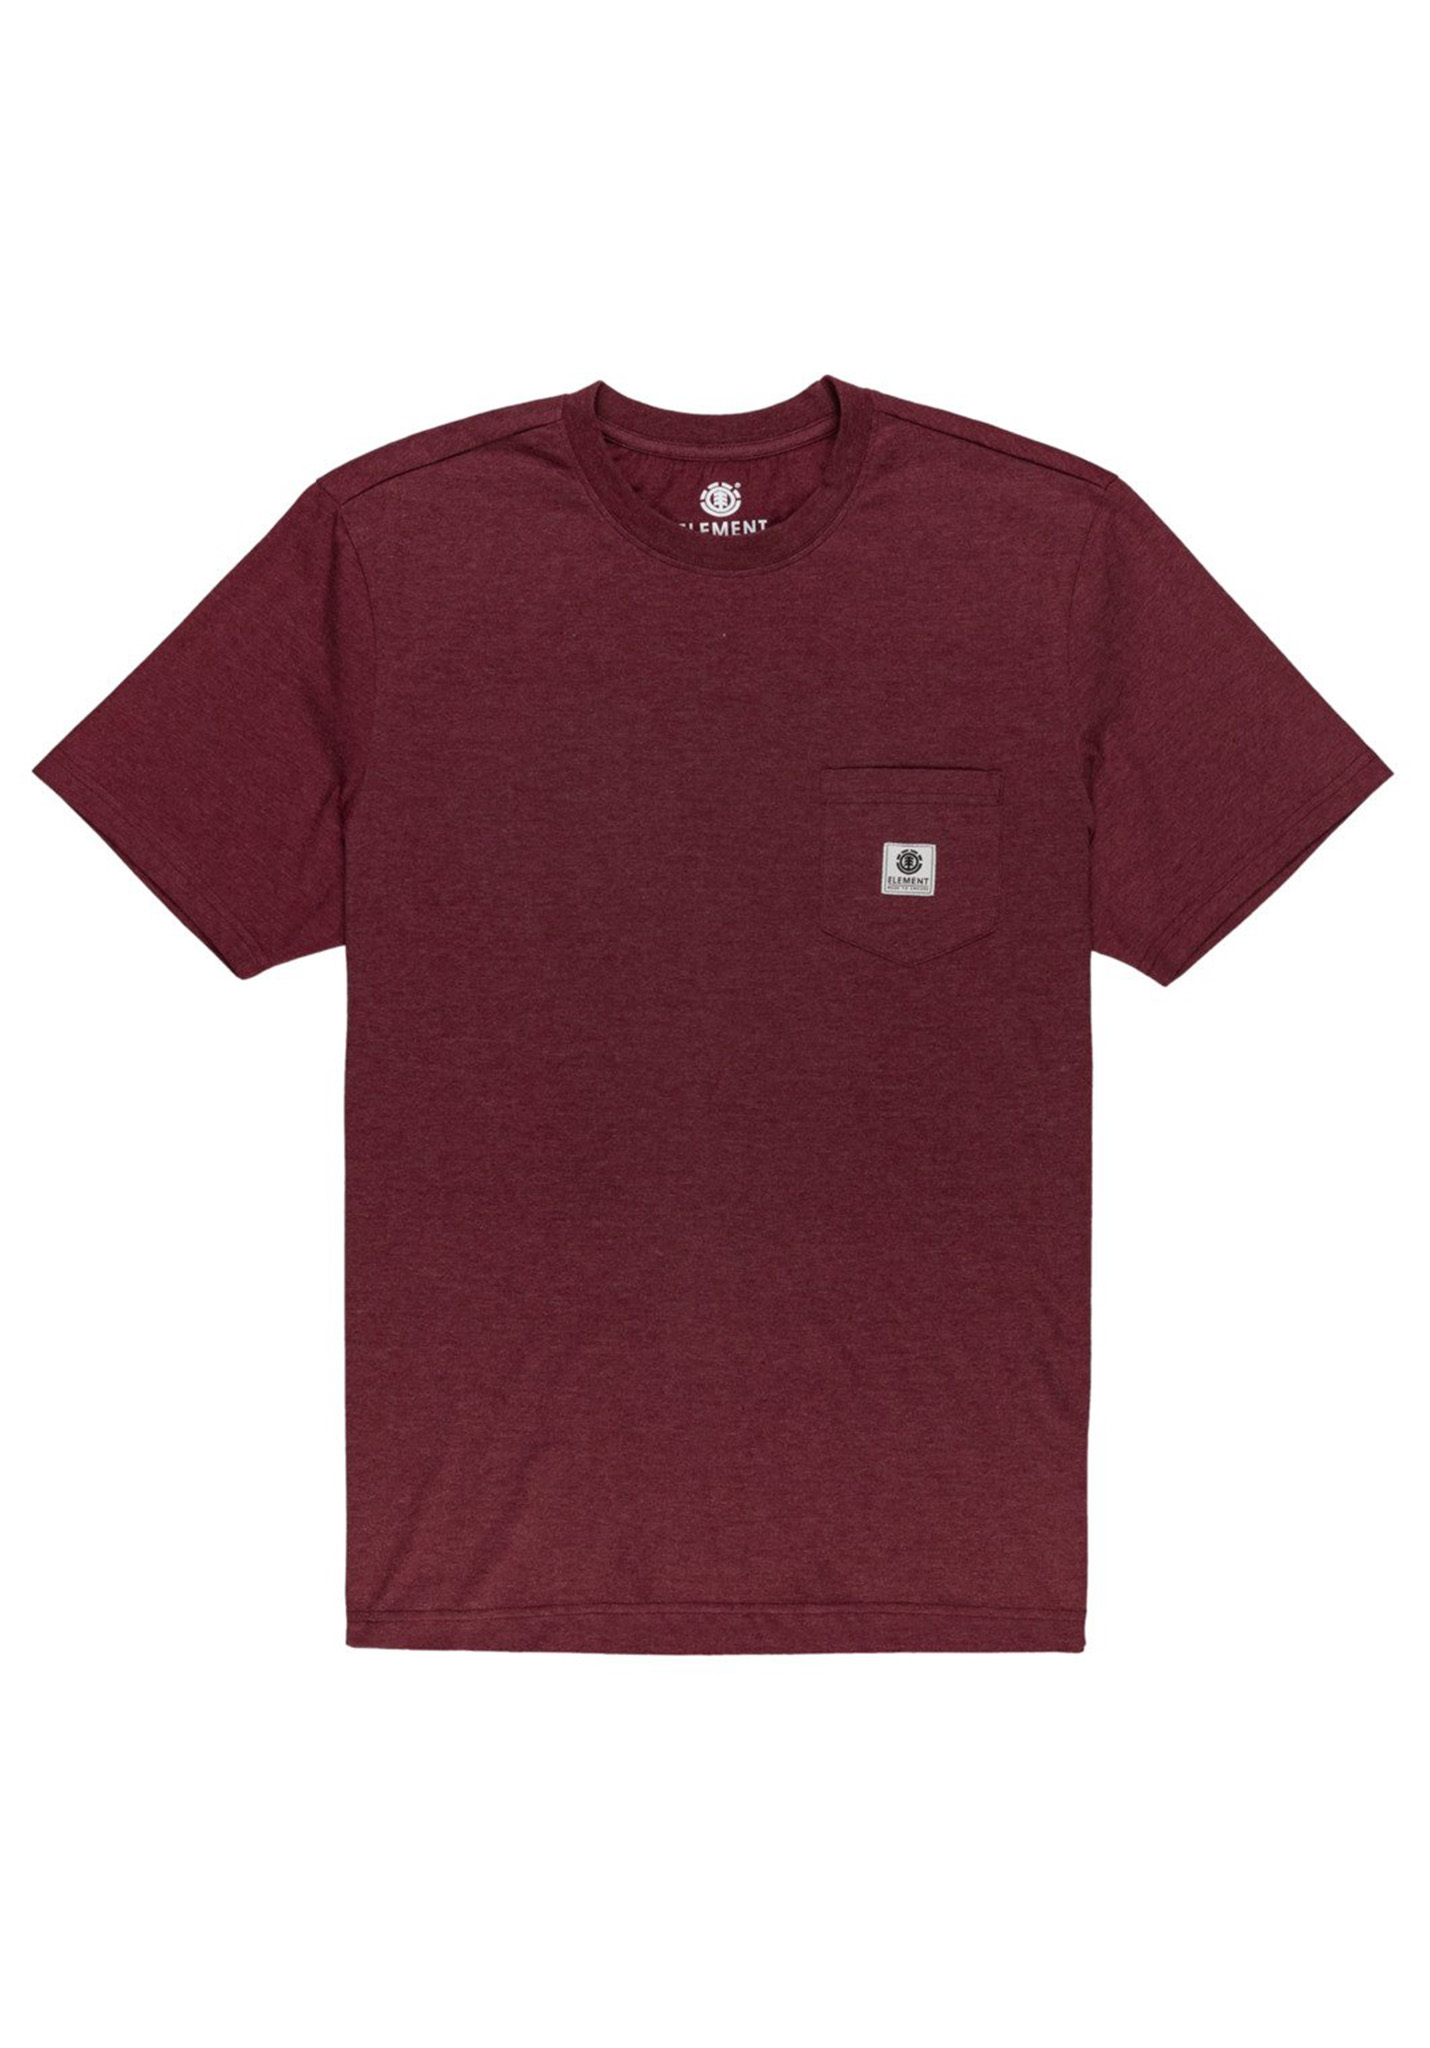 Element Basic Pocket T-Shirt vint red heather XS